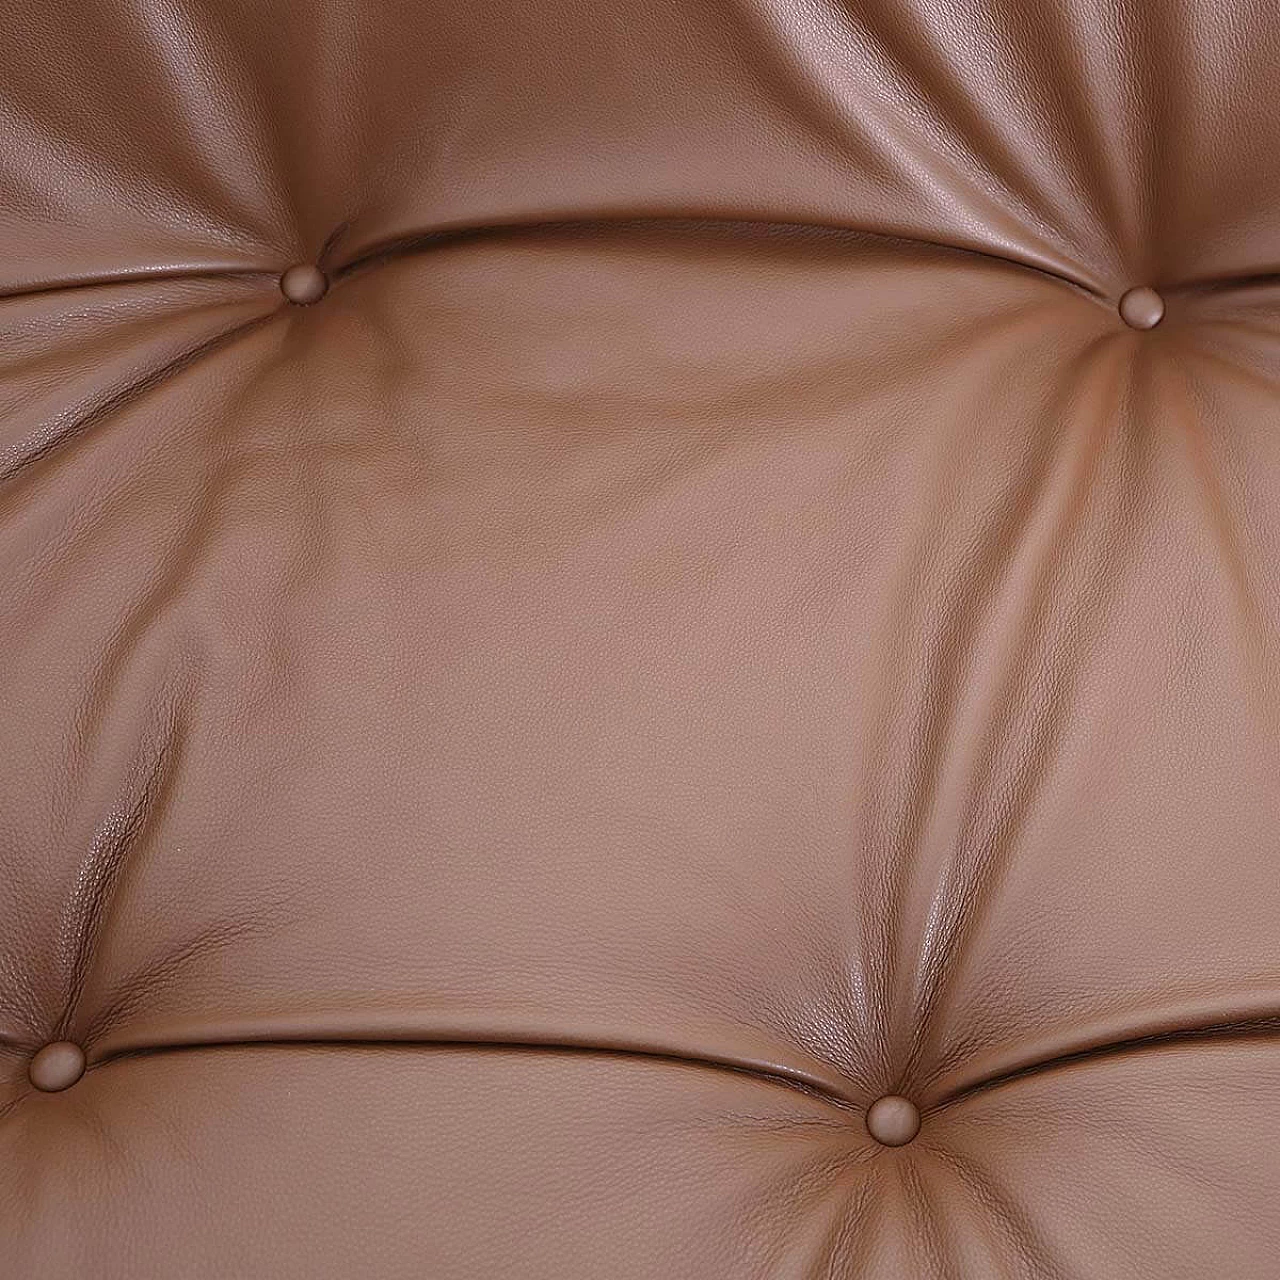 Plumpstones brown capitonné leather sofa by spHaus 3